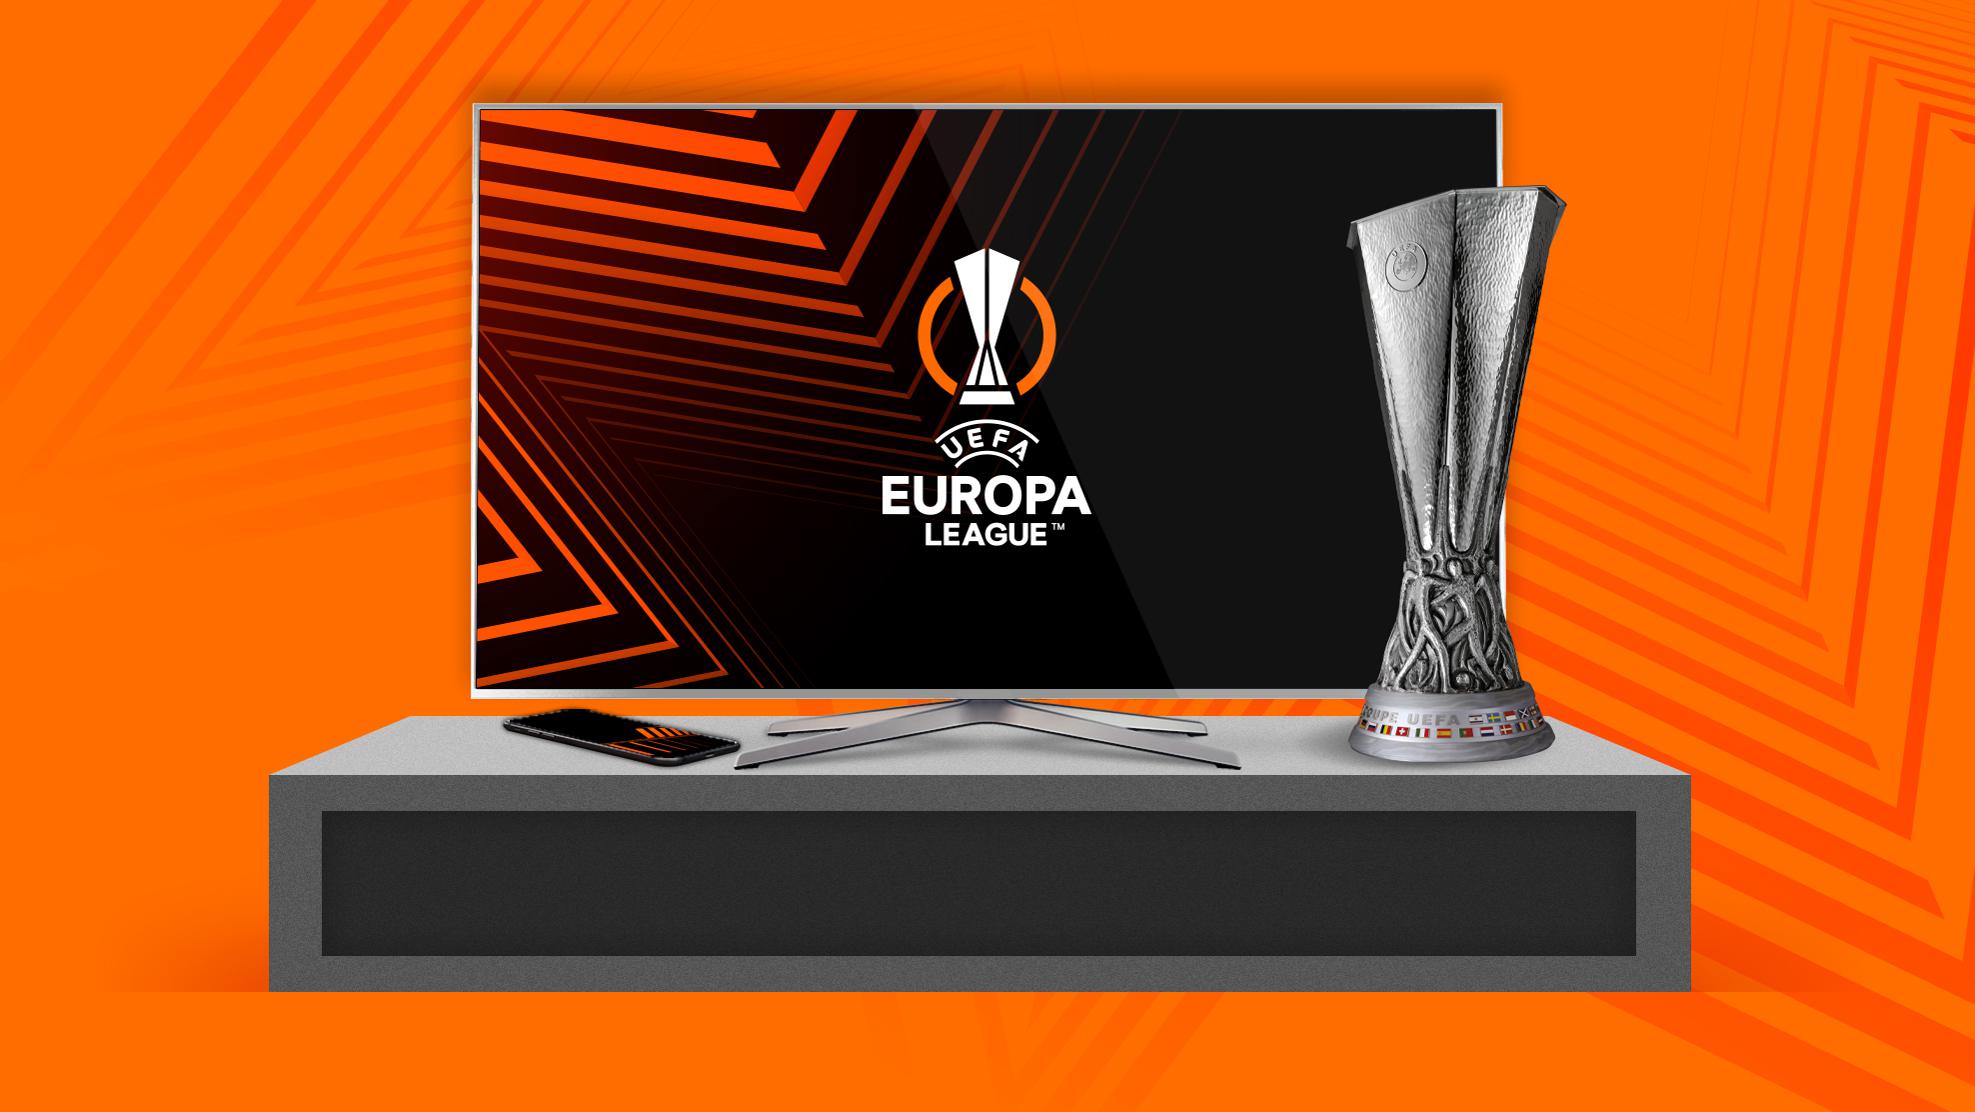  Europa League, TV Channels, Live, Streaming |  UEFA Europa League

